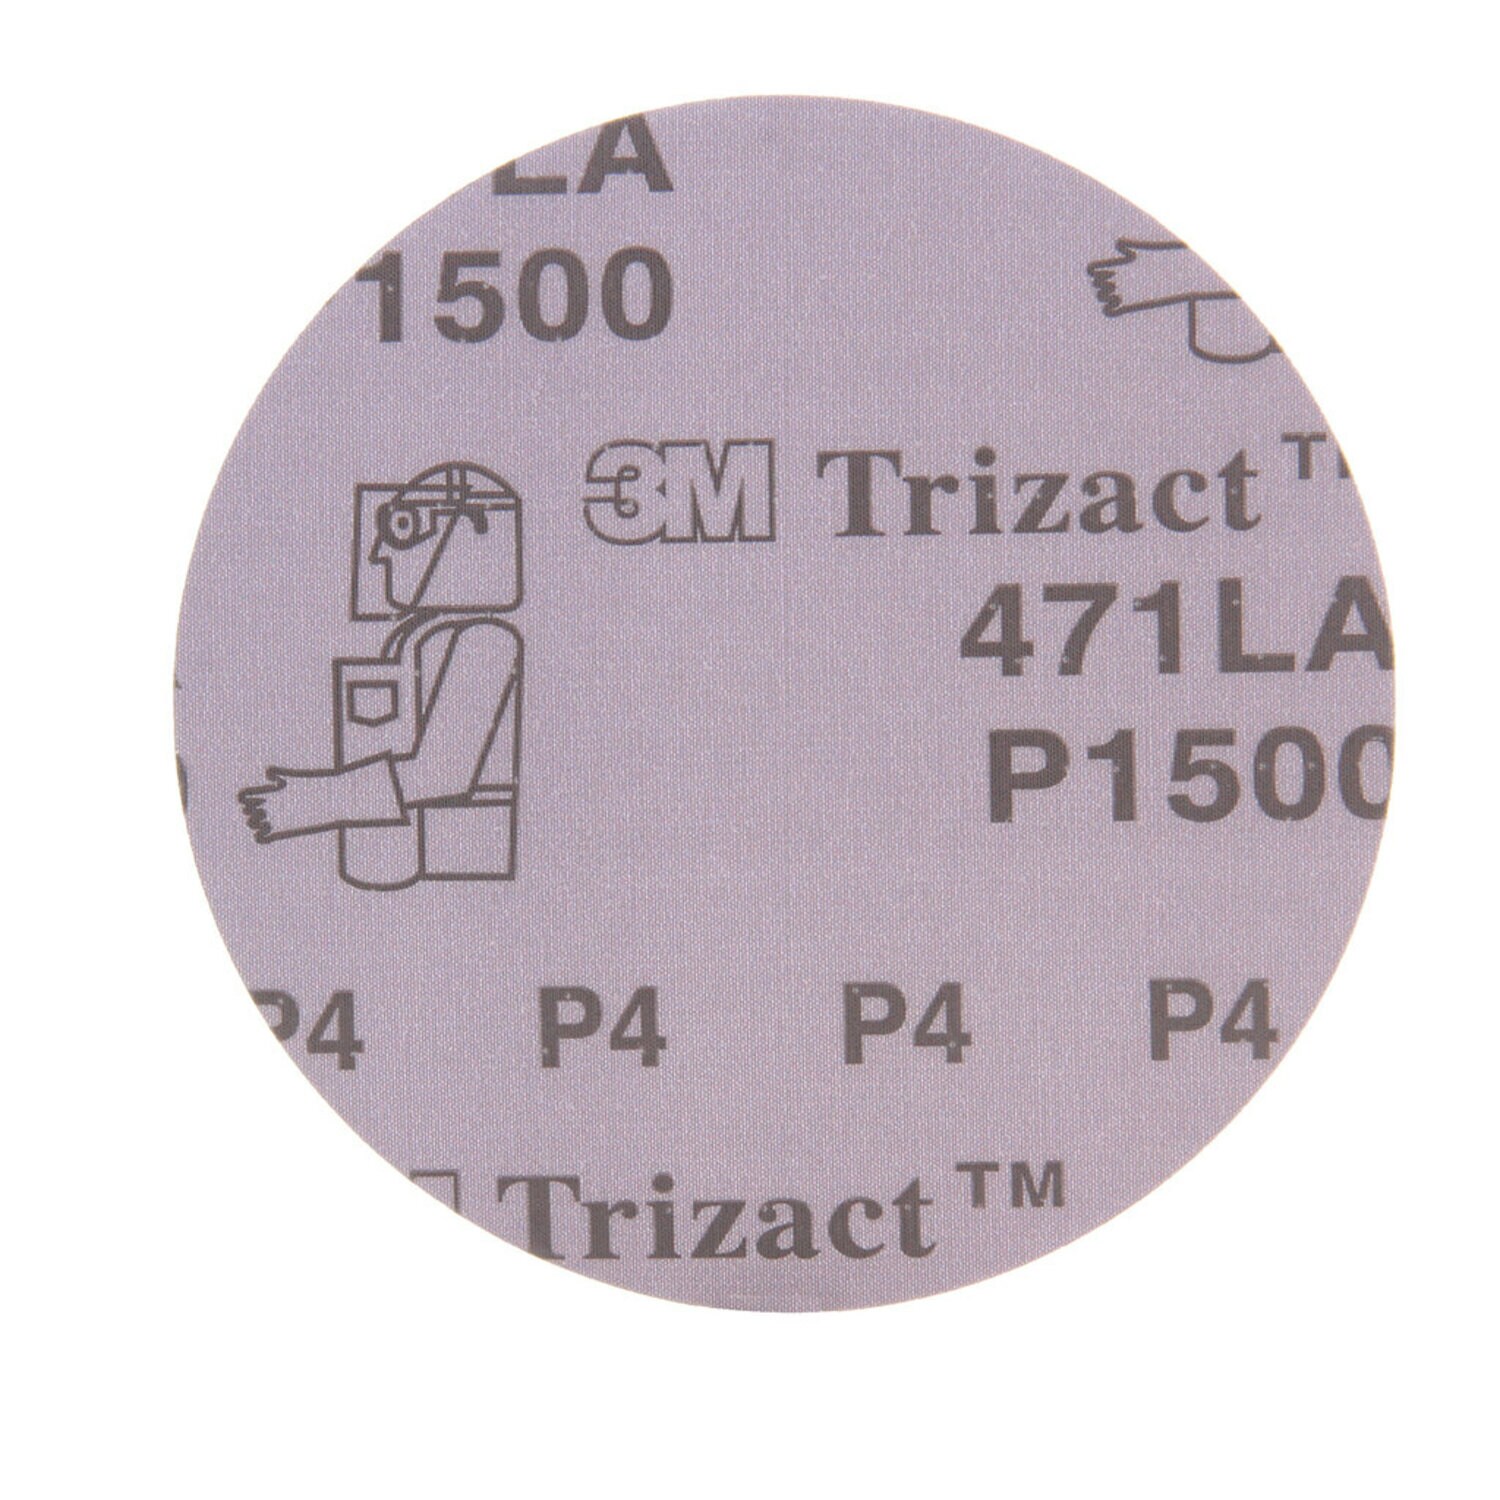 7100041247 - 3M Trizact Hookit Clear Coat Sanding Abrasive Disc 02095, P1500, A10,
5 in (125 mm), 25 Discs/Carton, 4 Cartons/Case